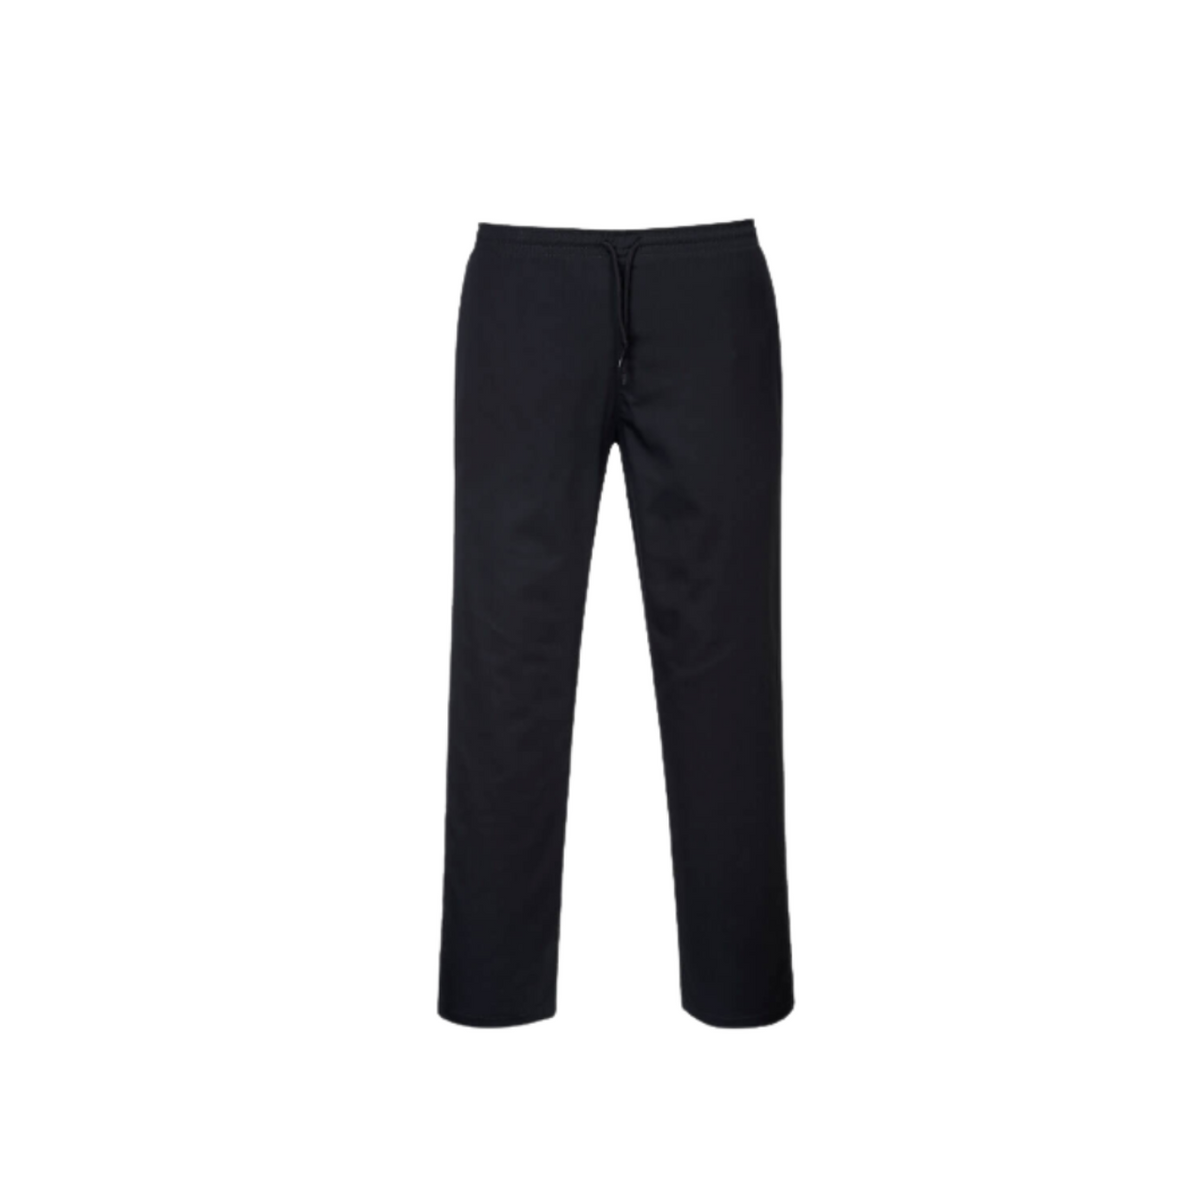 Portwest Drawstring Pants Lightweight Comfortable Black Chef Pant C070-Collins Clothing Co